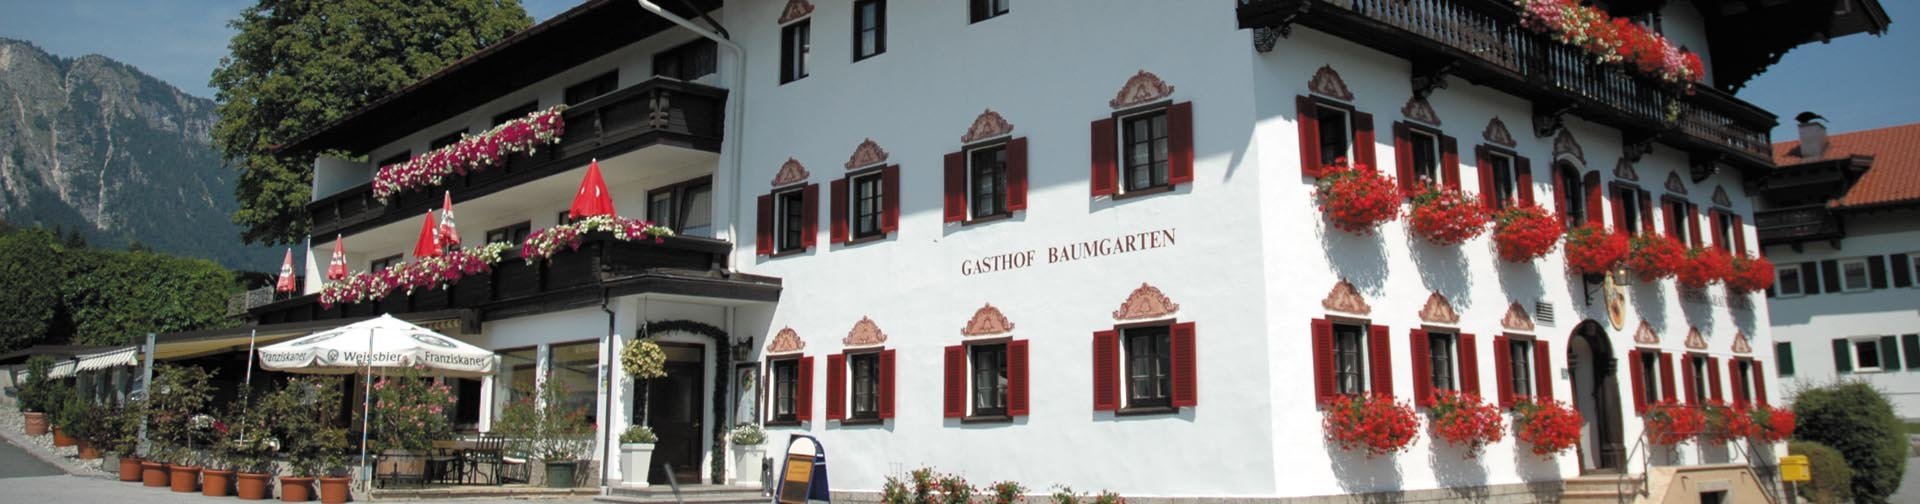 Gasthof Baumgarten in Tirol